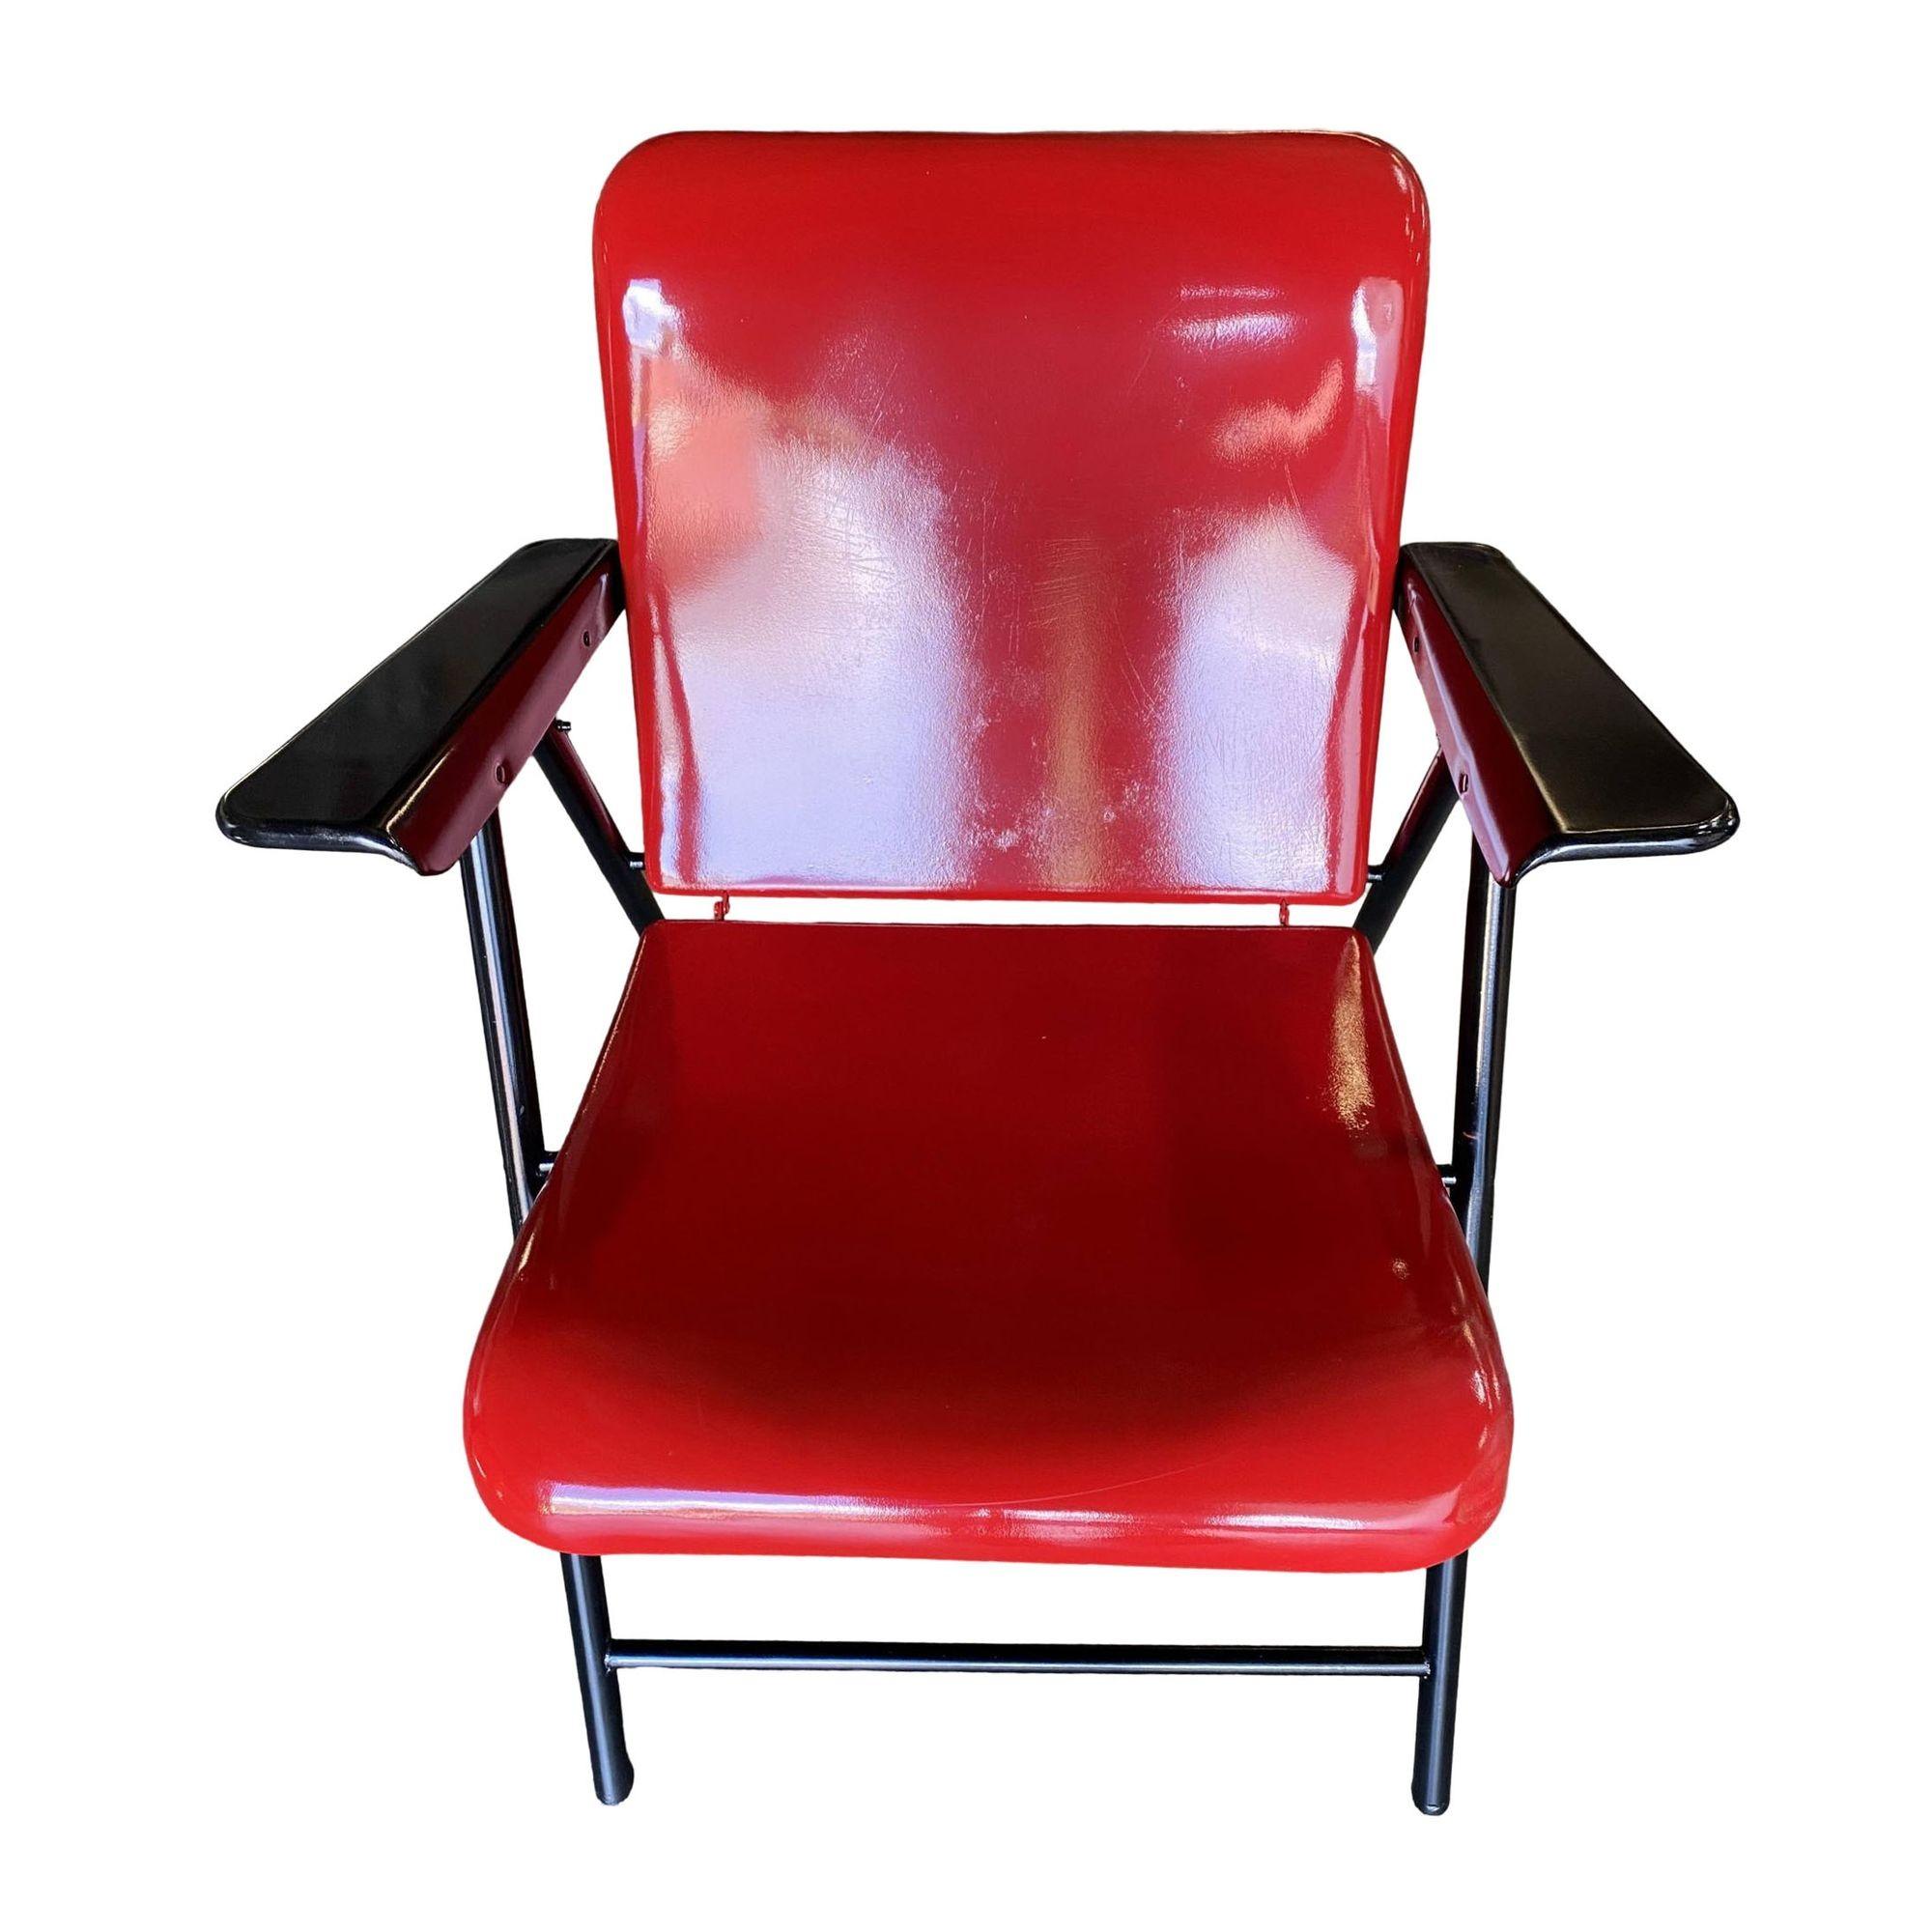 Original 1950 Russel Wright designed Steel Patio folding chair with original 